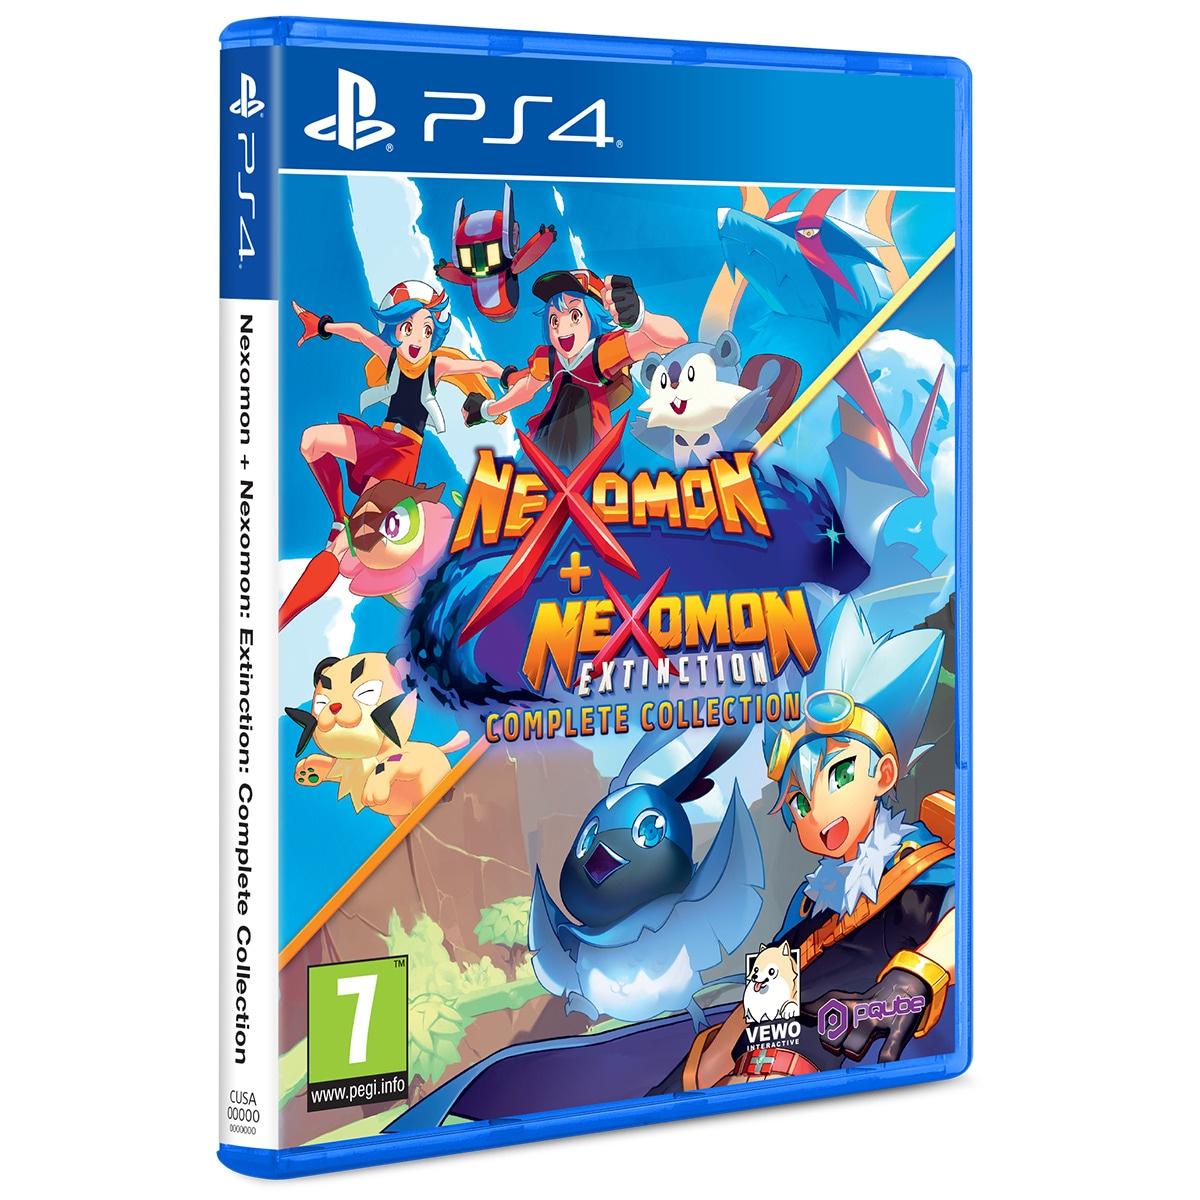 Nexomon+Nexomon:Extinction: Complete Collection PS4